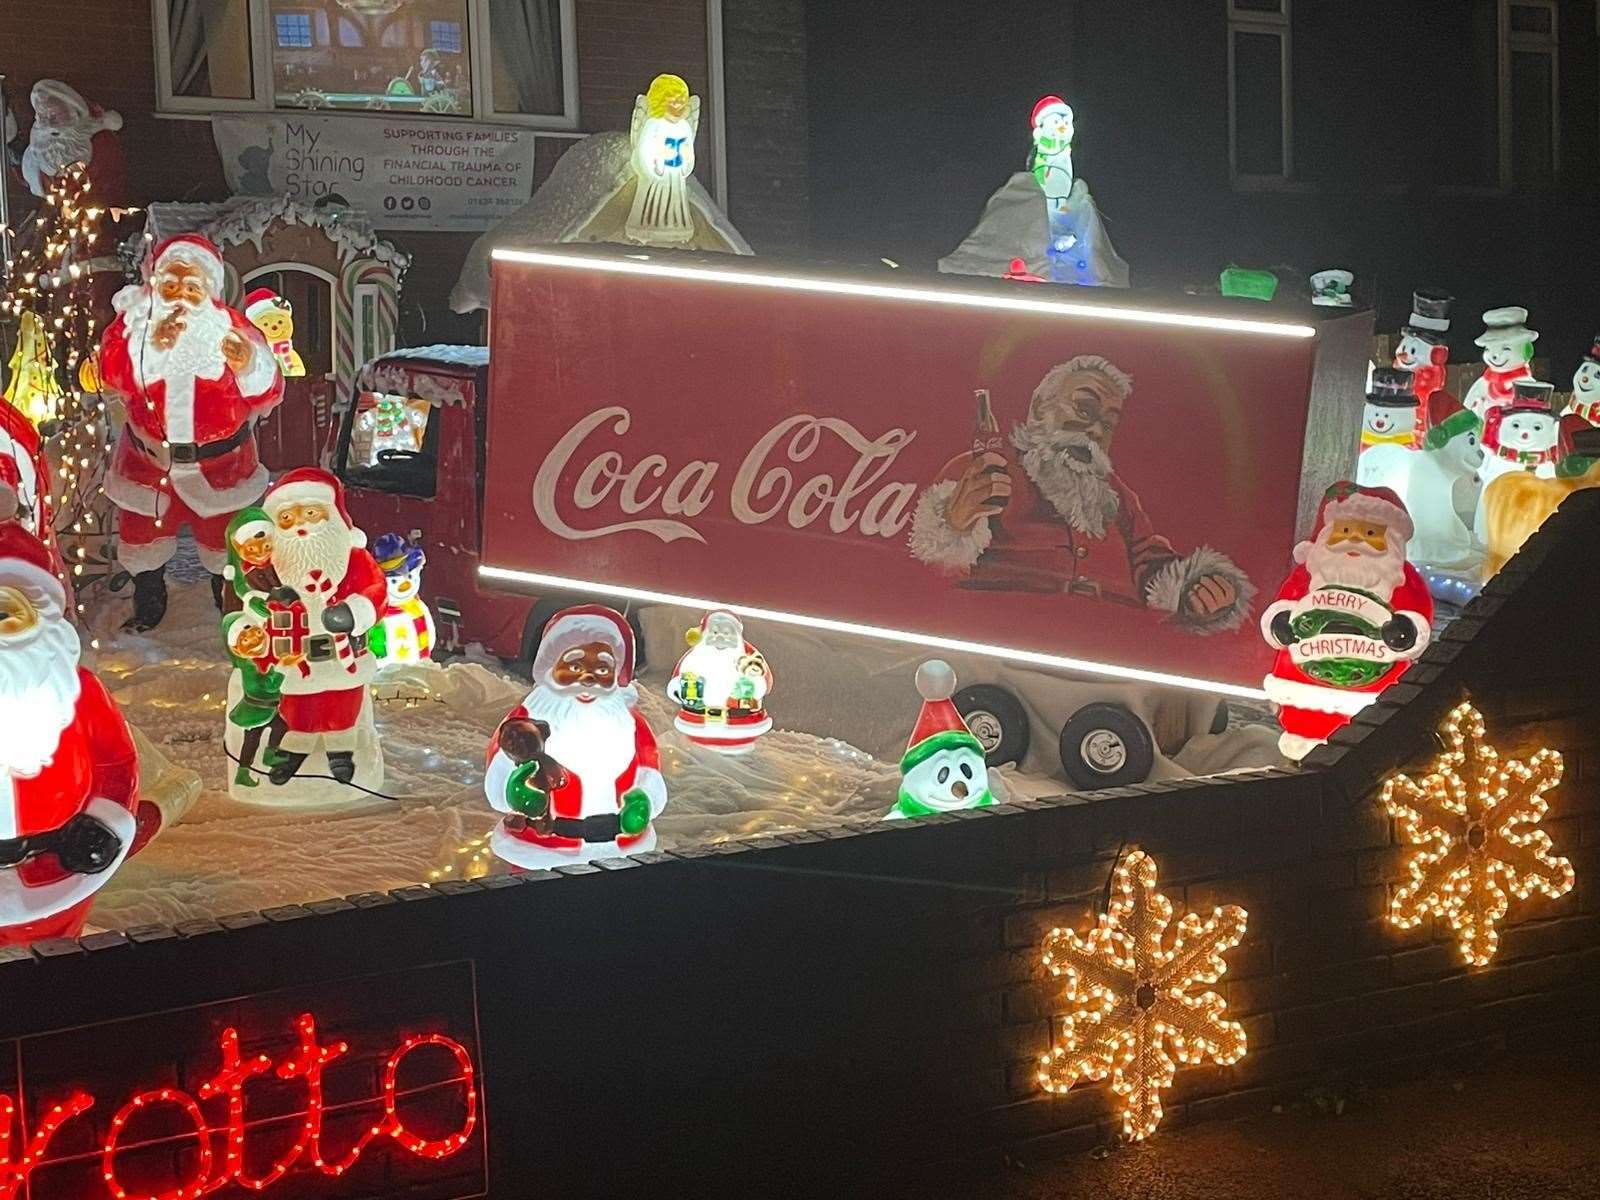 Zoe spent £1,000 building a replica of the Coco-Cola truck